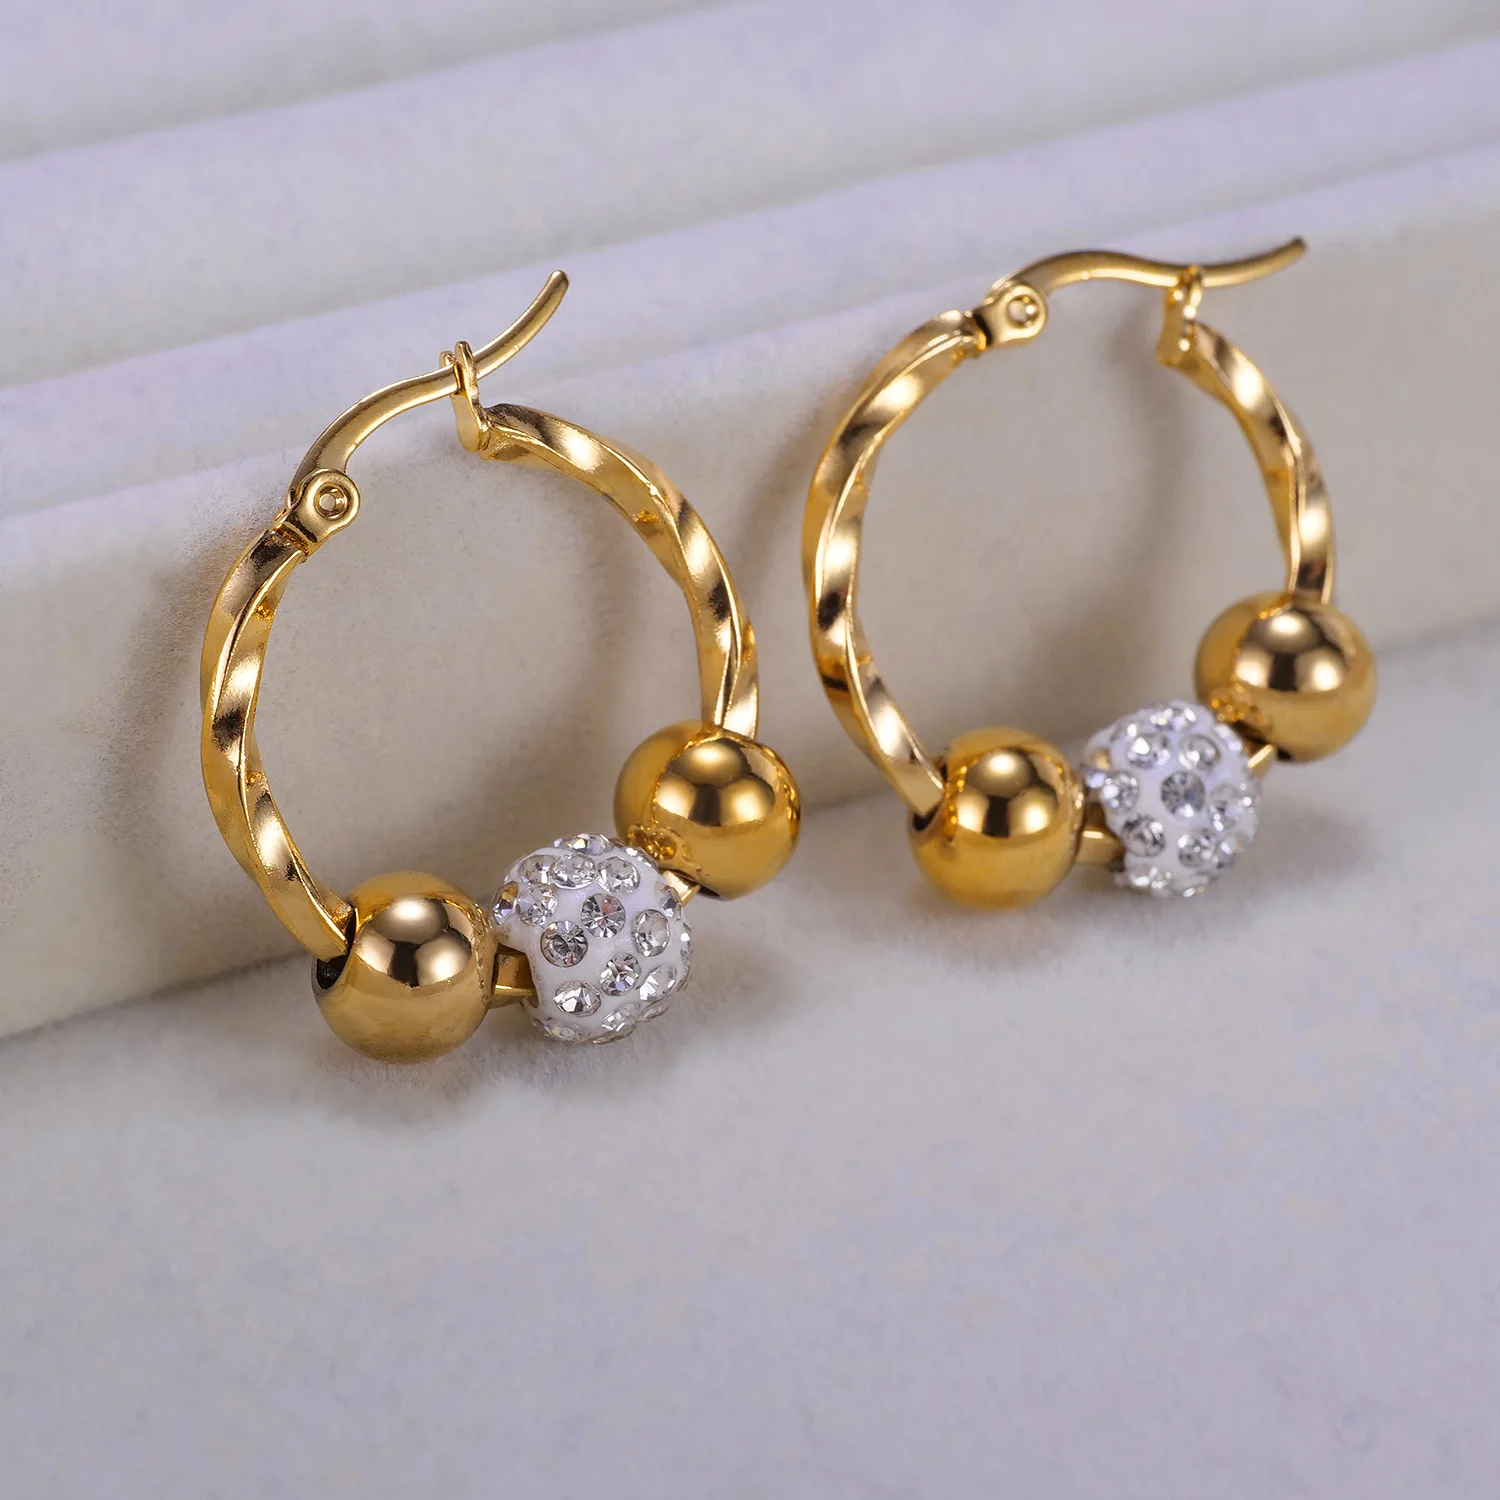 

JHSL Hyperbole Lady Women Korean Statement Hoop Earring White Cubic Zircon Stone Gold Color Fashion Jewelry Cocktail Party Gift